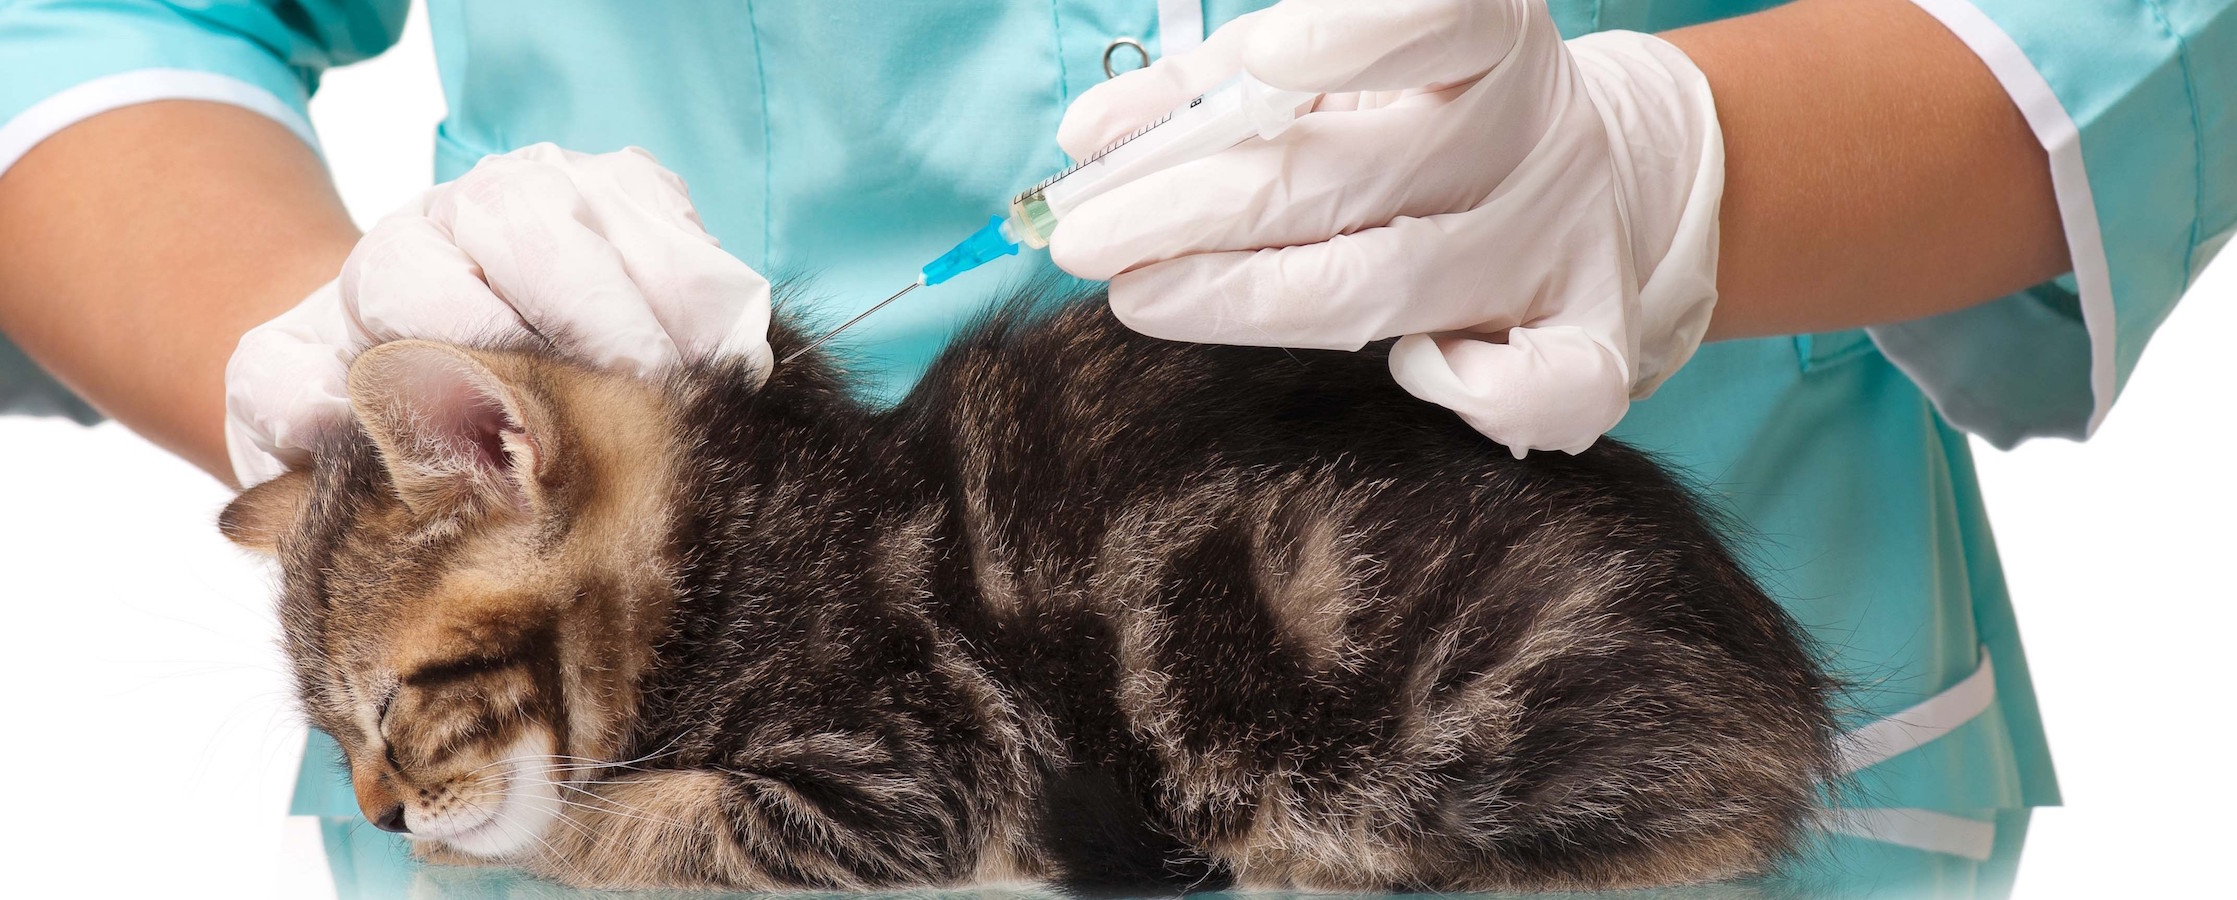 Сколько стоят прививки для кошек. Вакцинация кошек. Вакцинация ветклиника. Укол кошке. Вакцинация животных от бешенства.